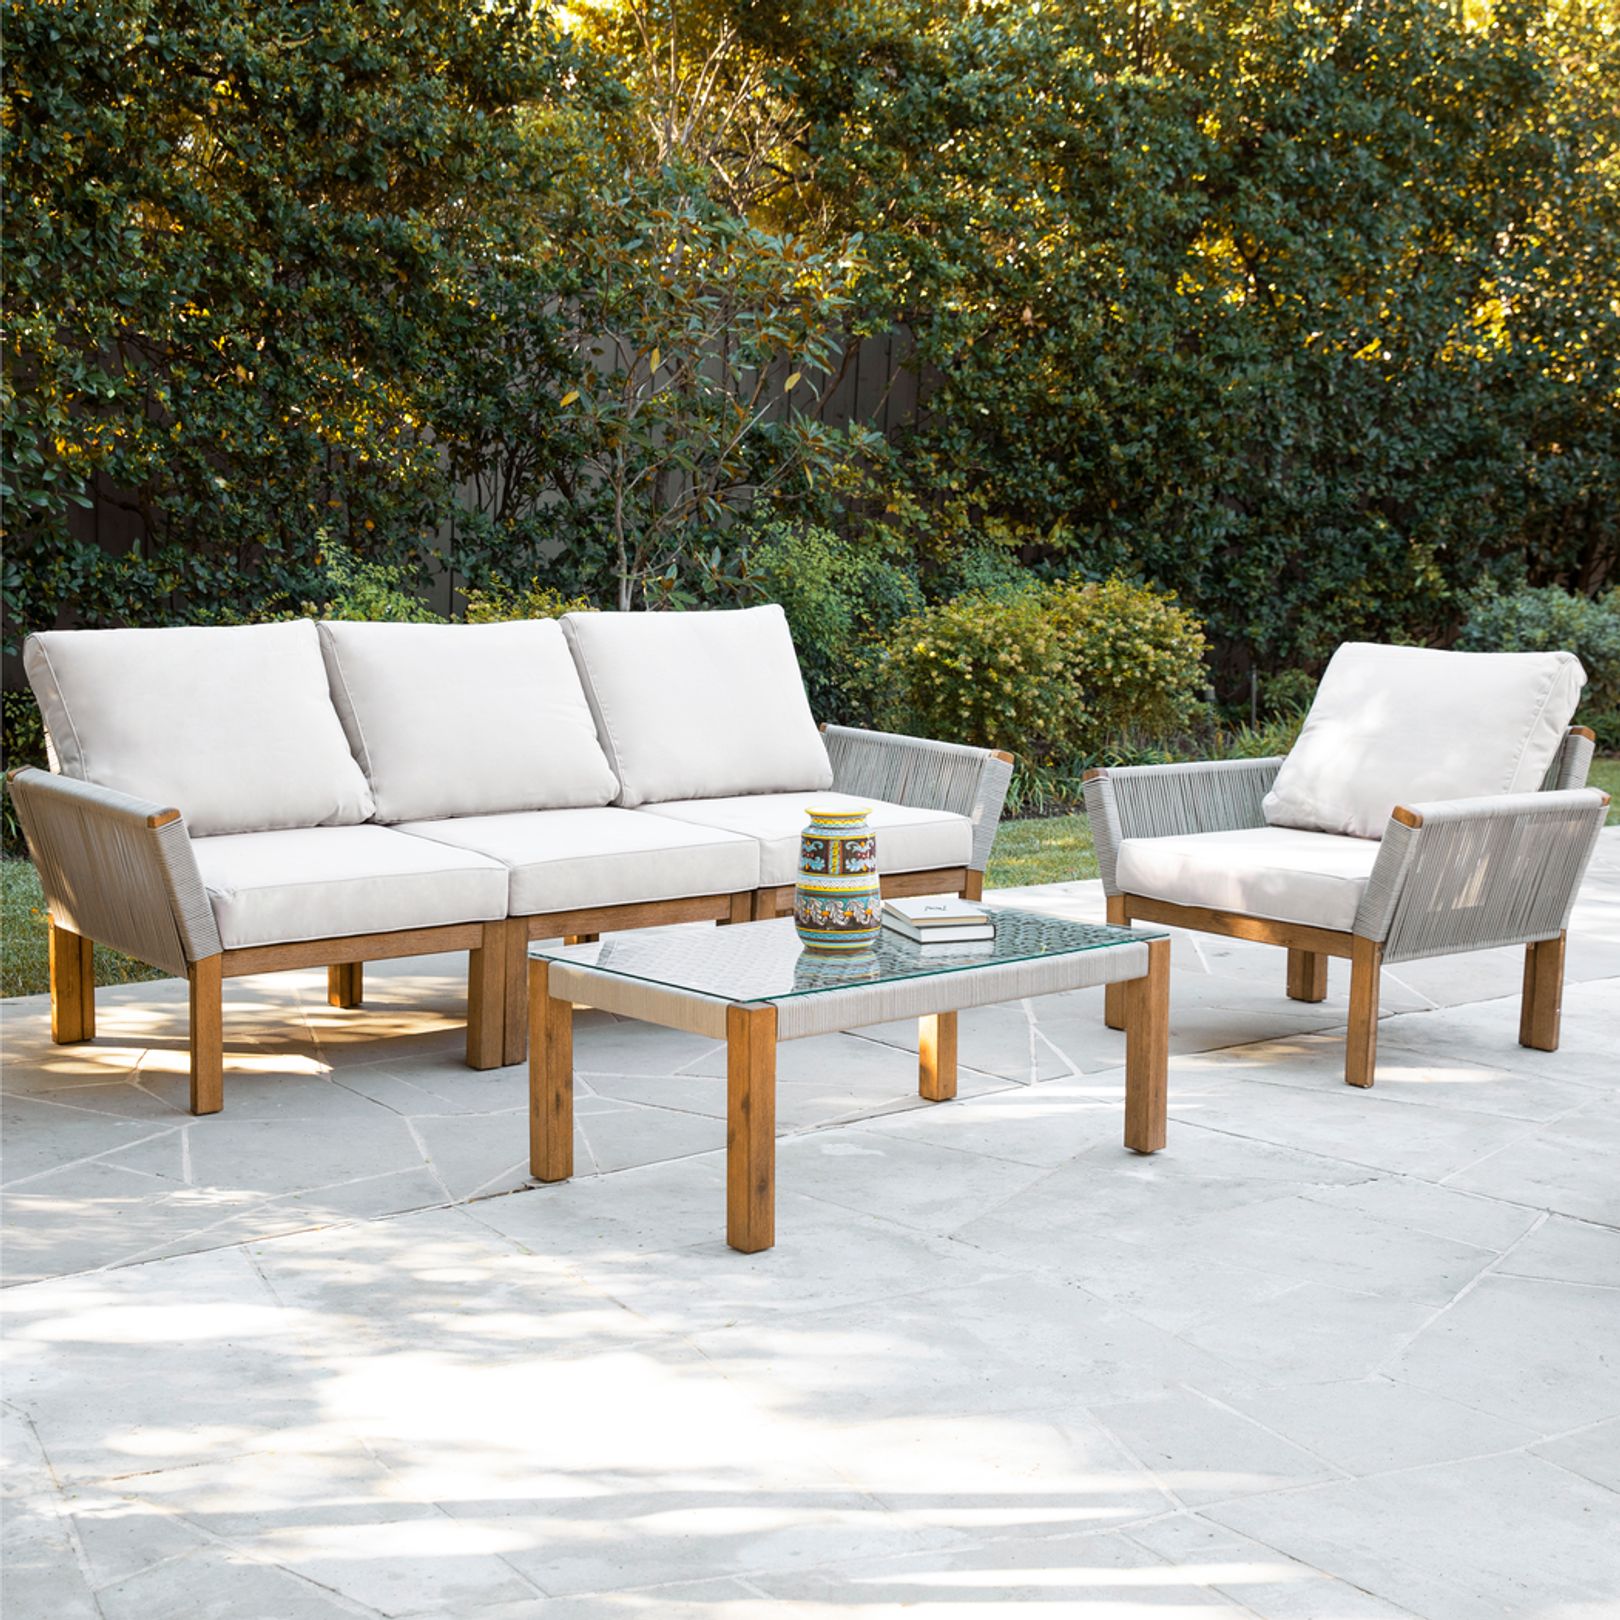 Three-piece outdoor seating set